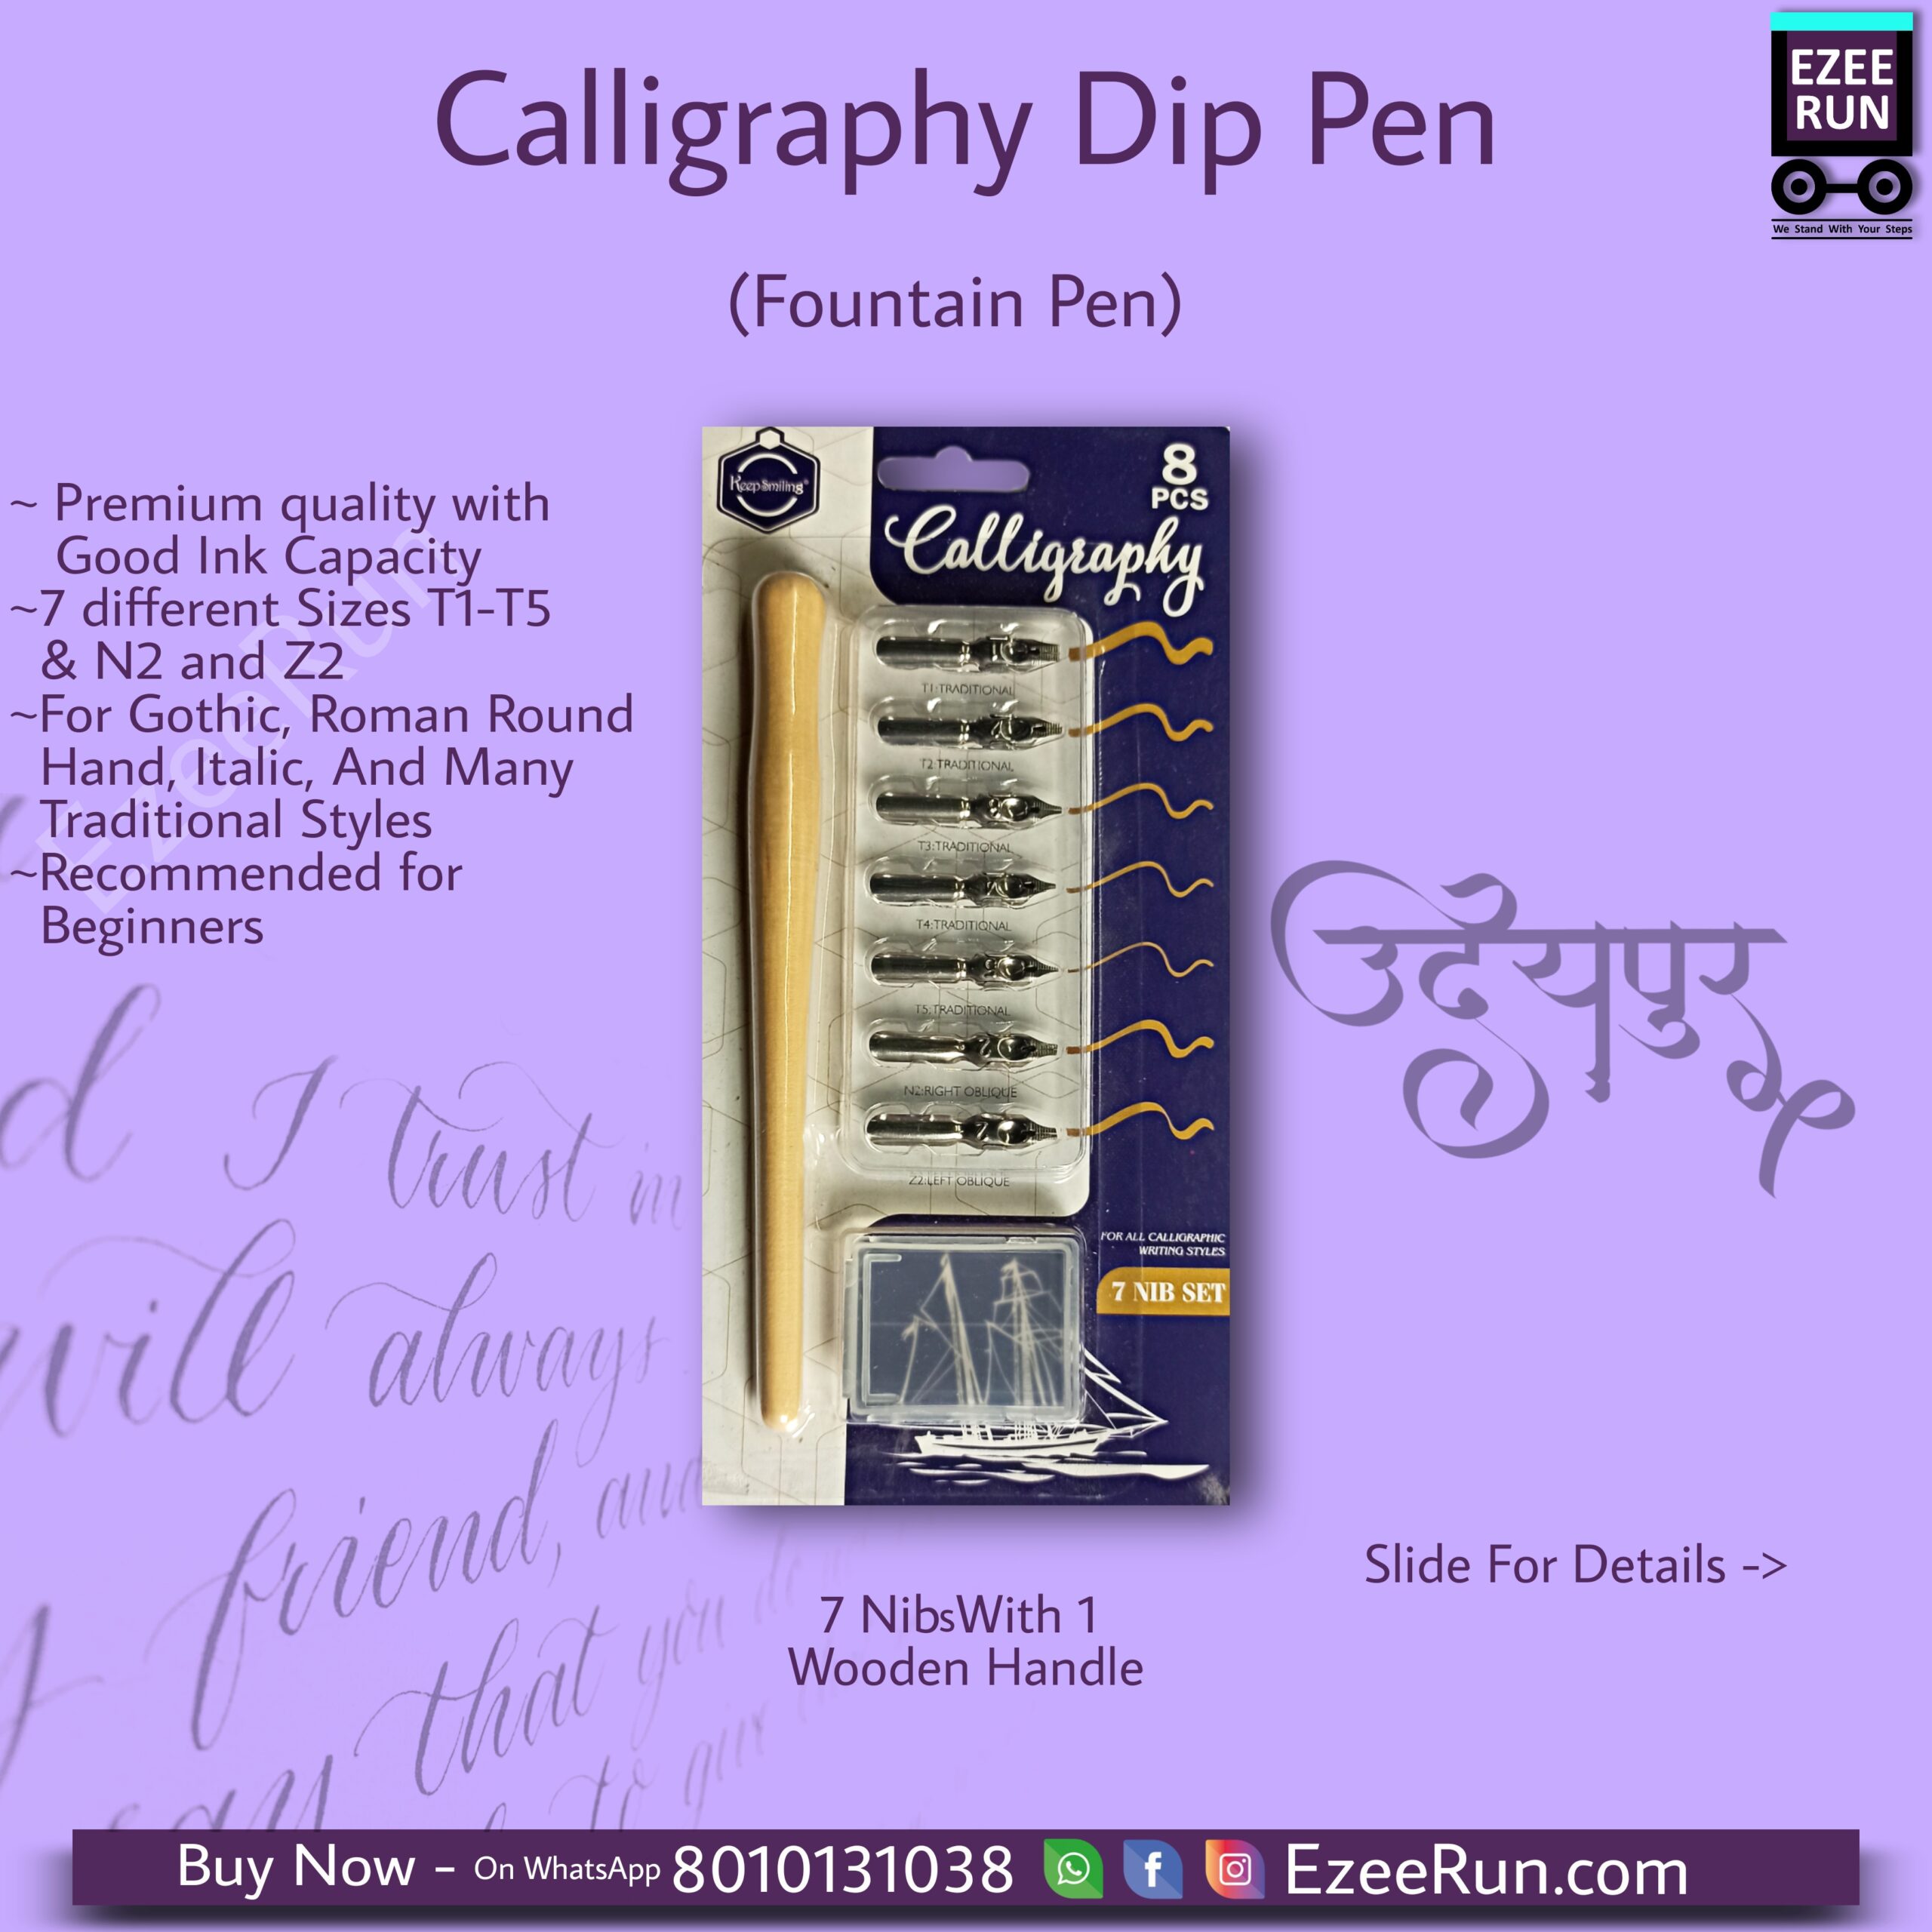 Calligraphy Dip Pen With 7 Nibs - EzeeRun